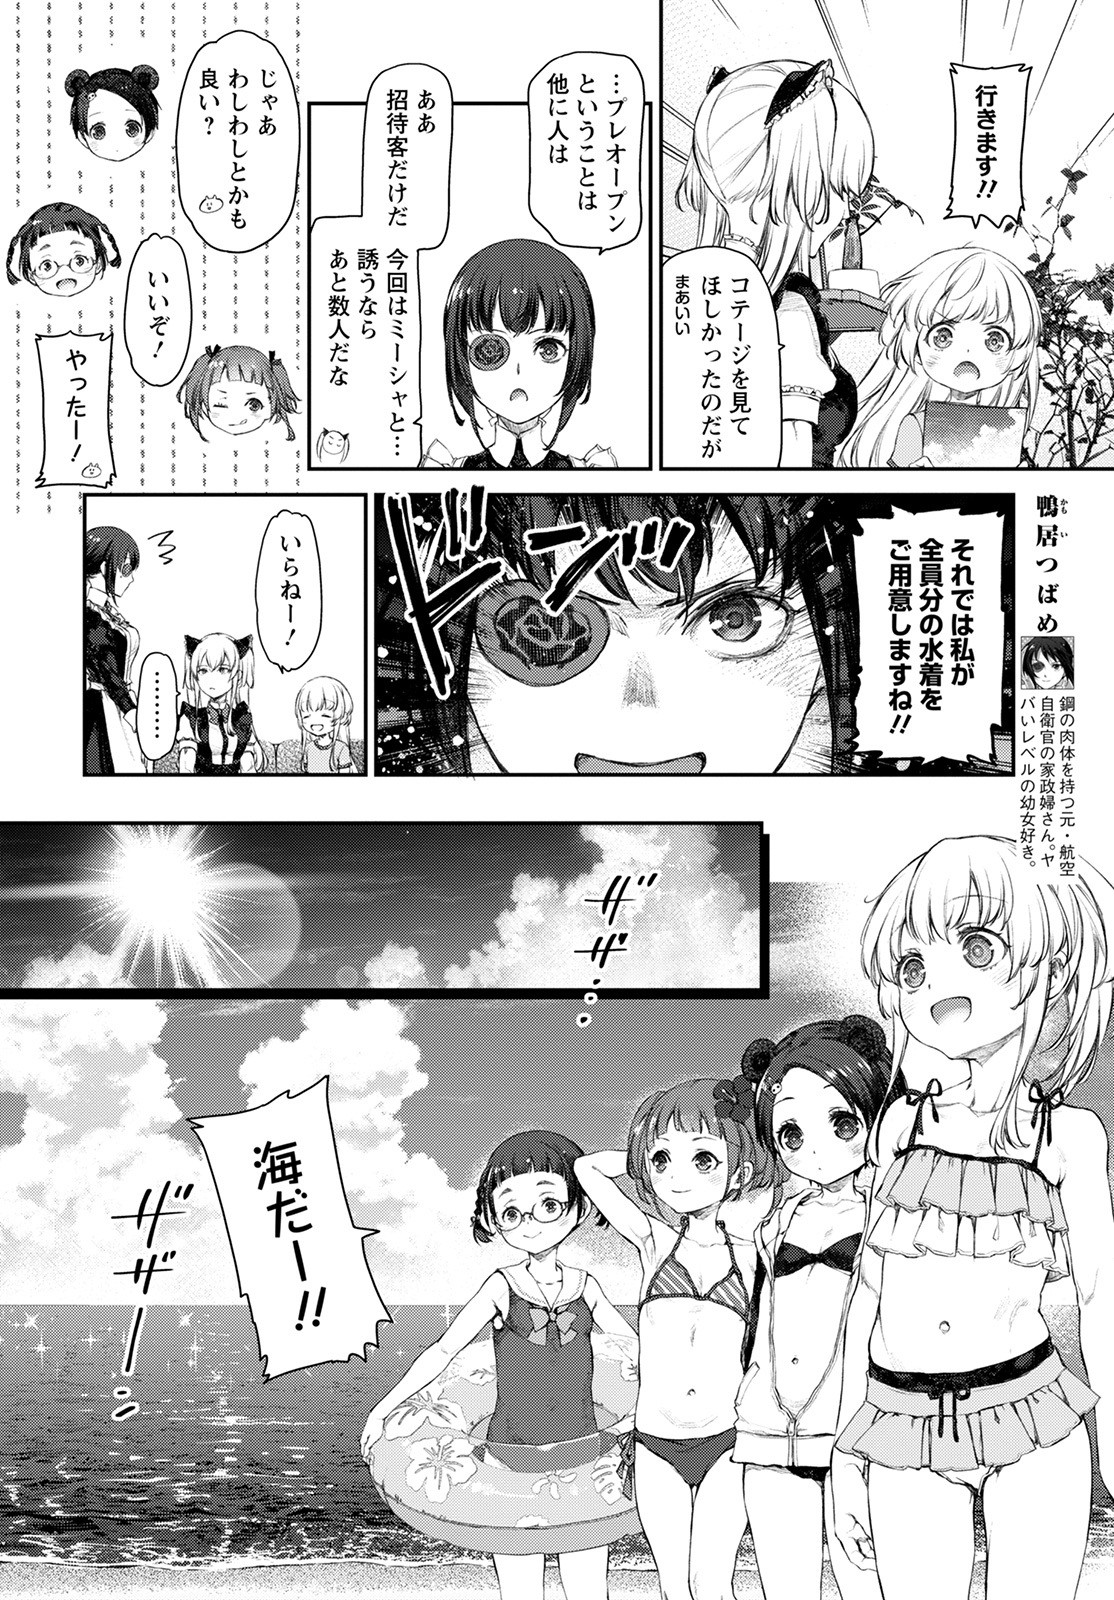 Uchi no Maid ga Uzasugiru! - Chapter 51 - Page 2